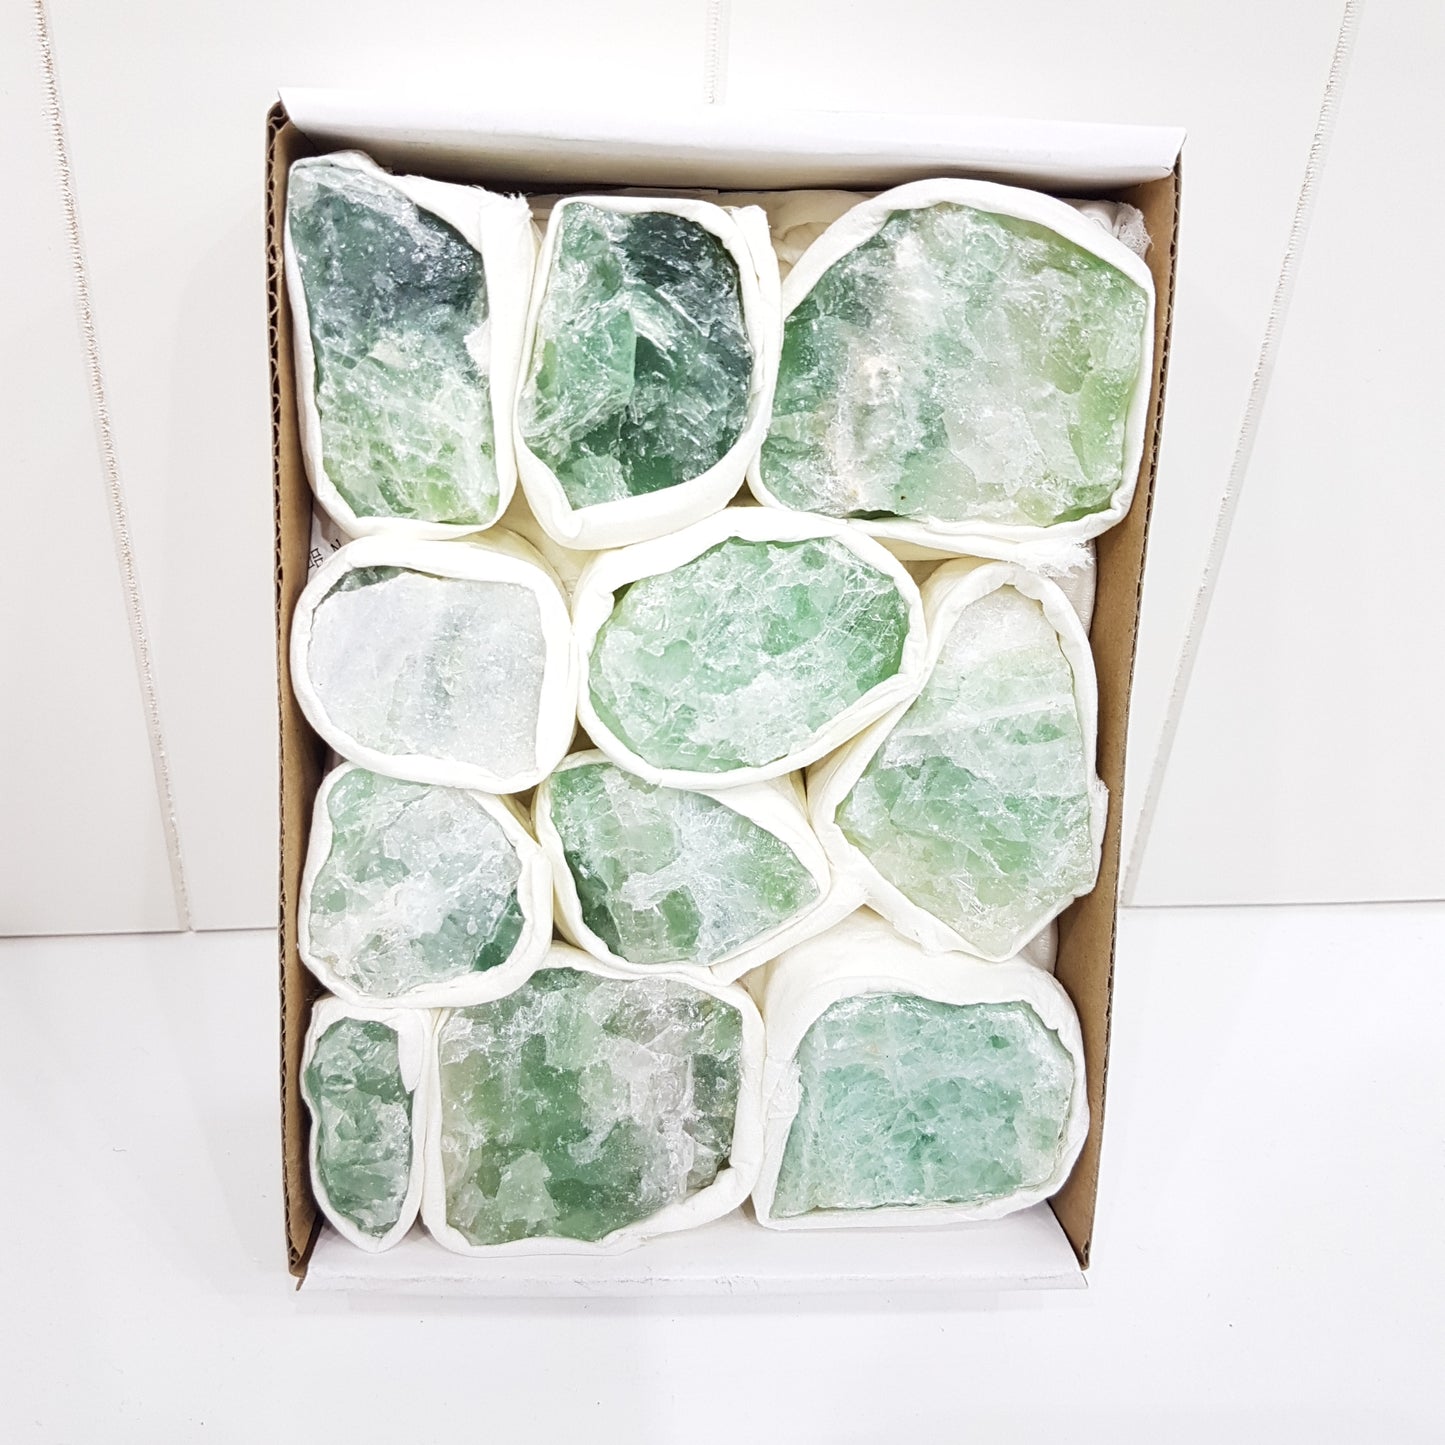 Box of Fluorite Gemstones